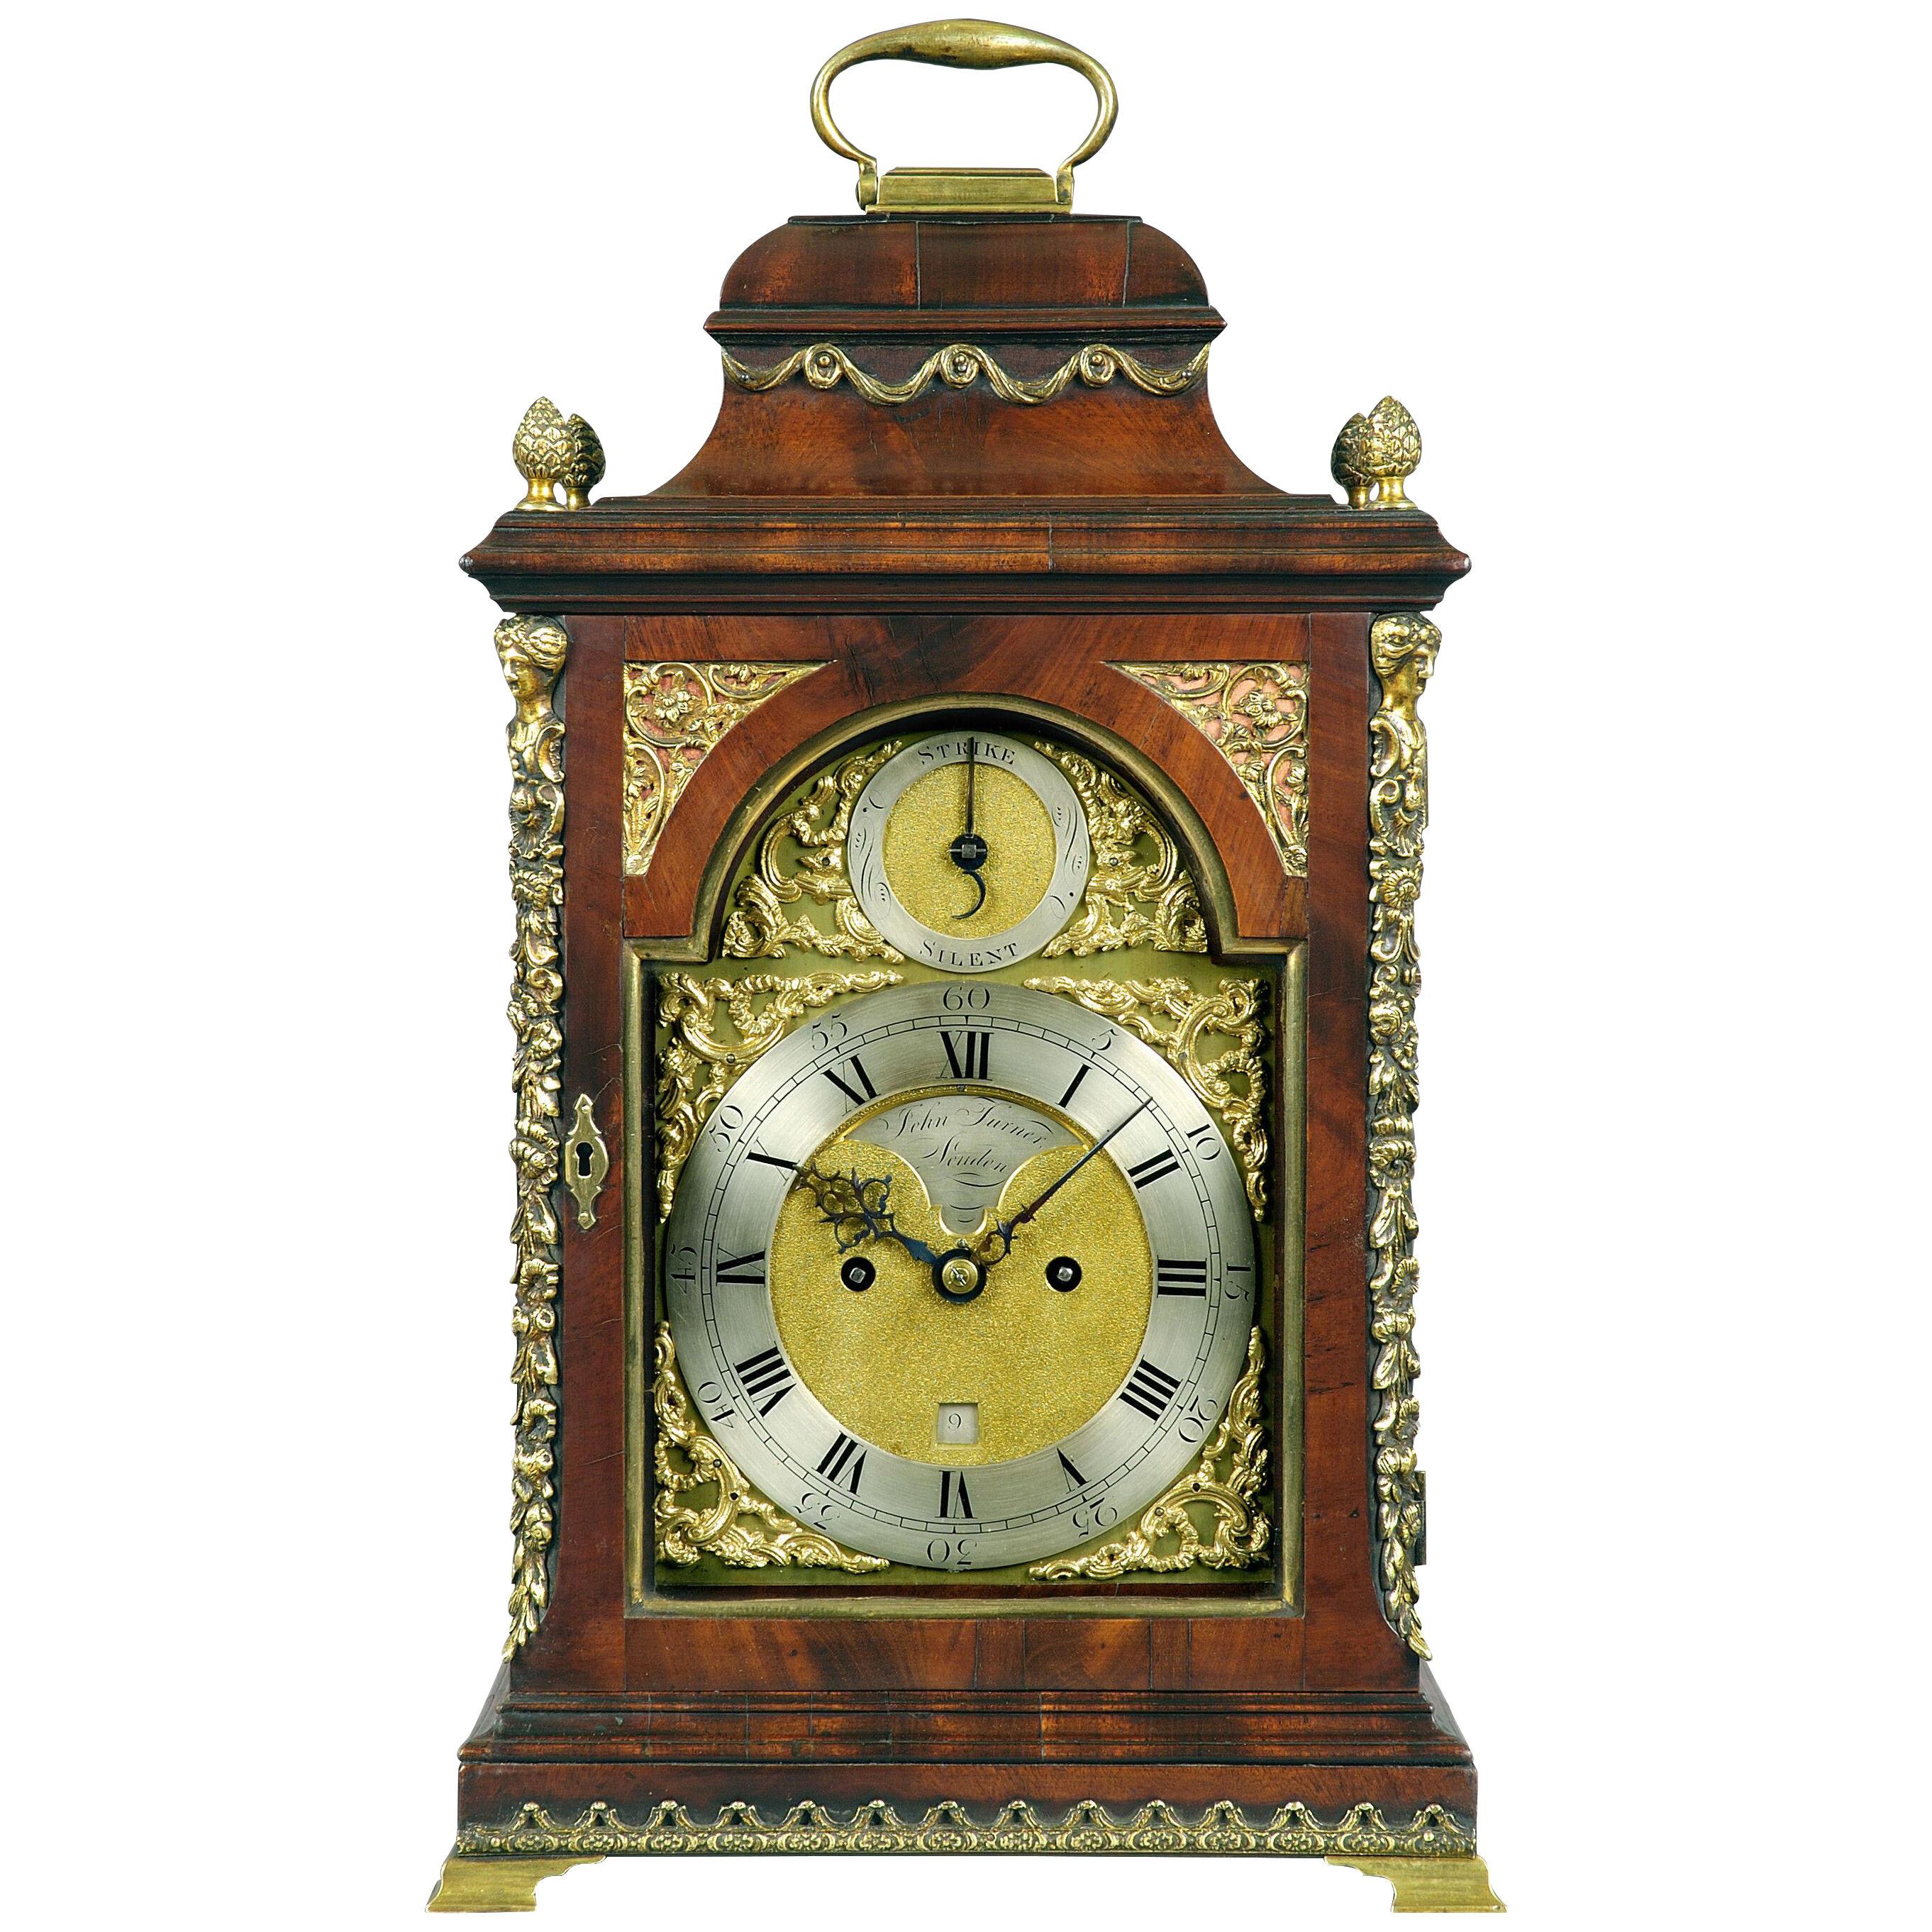 18th Century Antique Mahogany and Brass Bracket Clock by John Turner of London